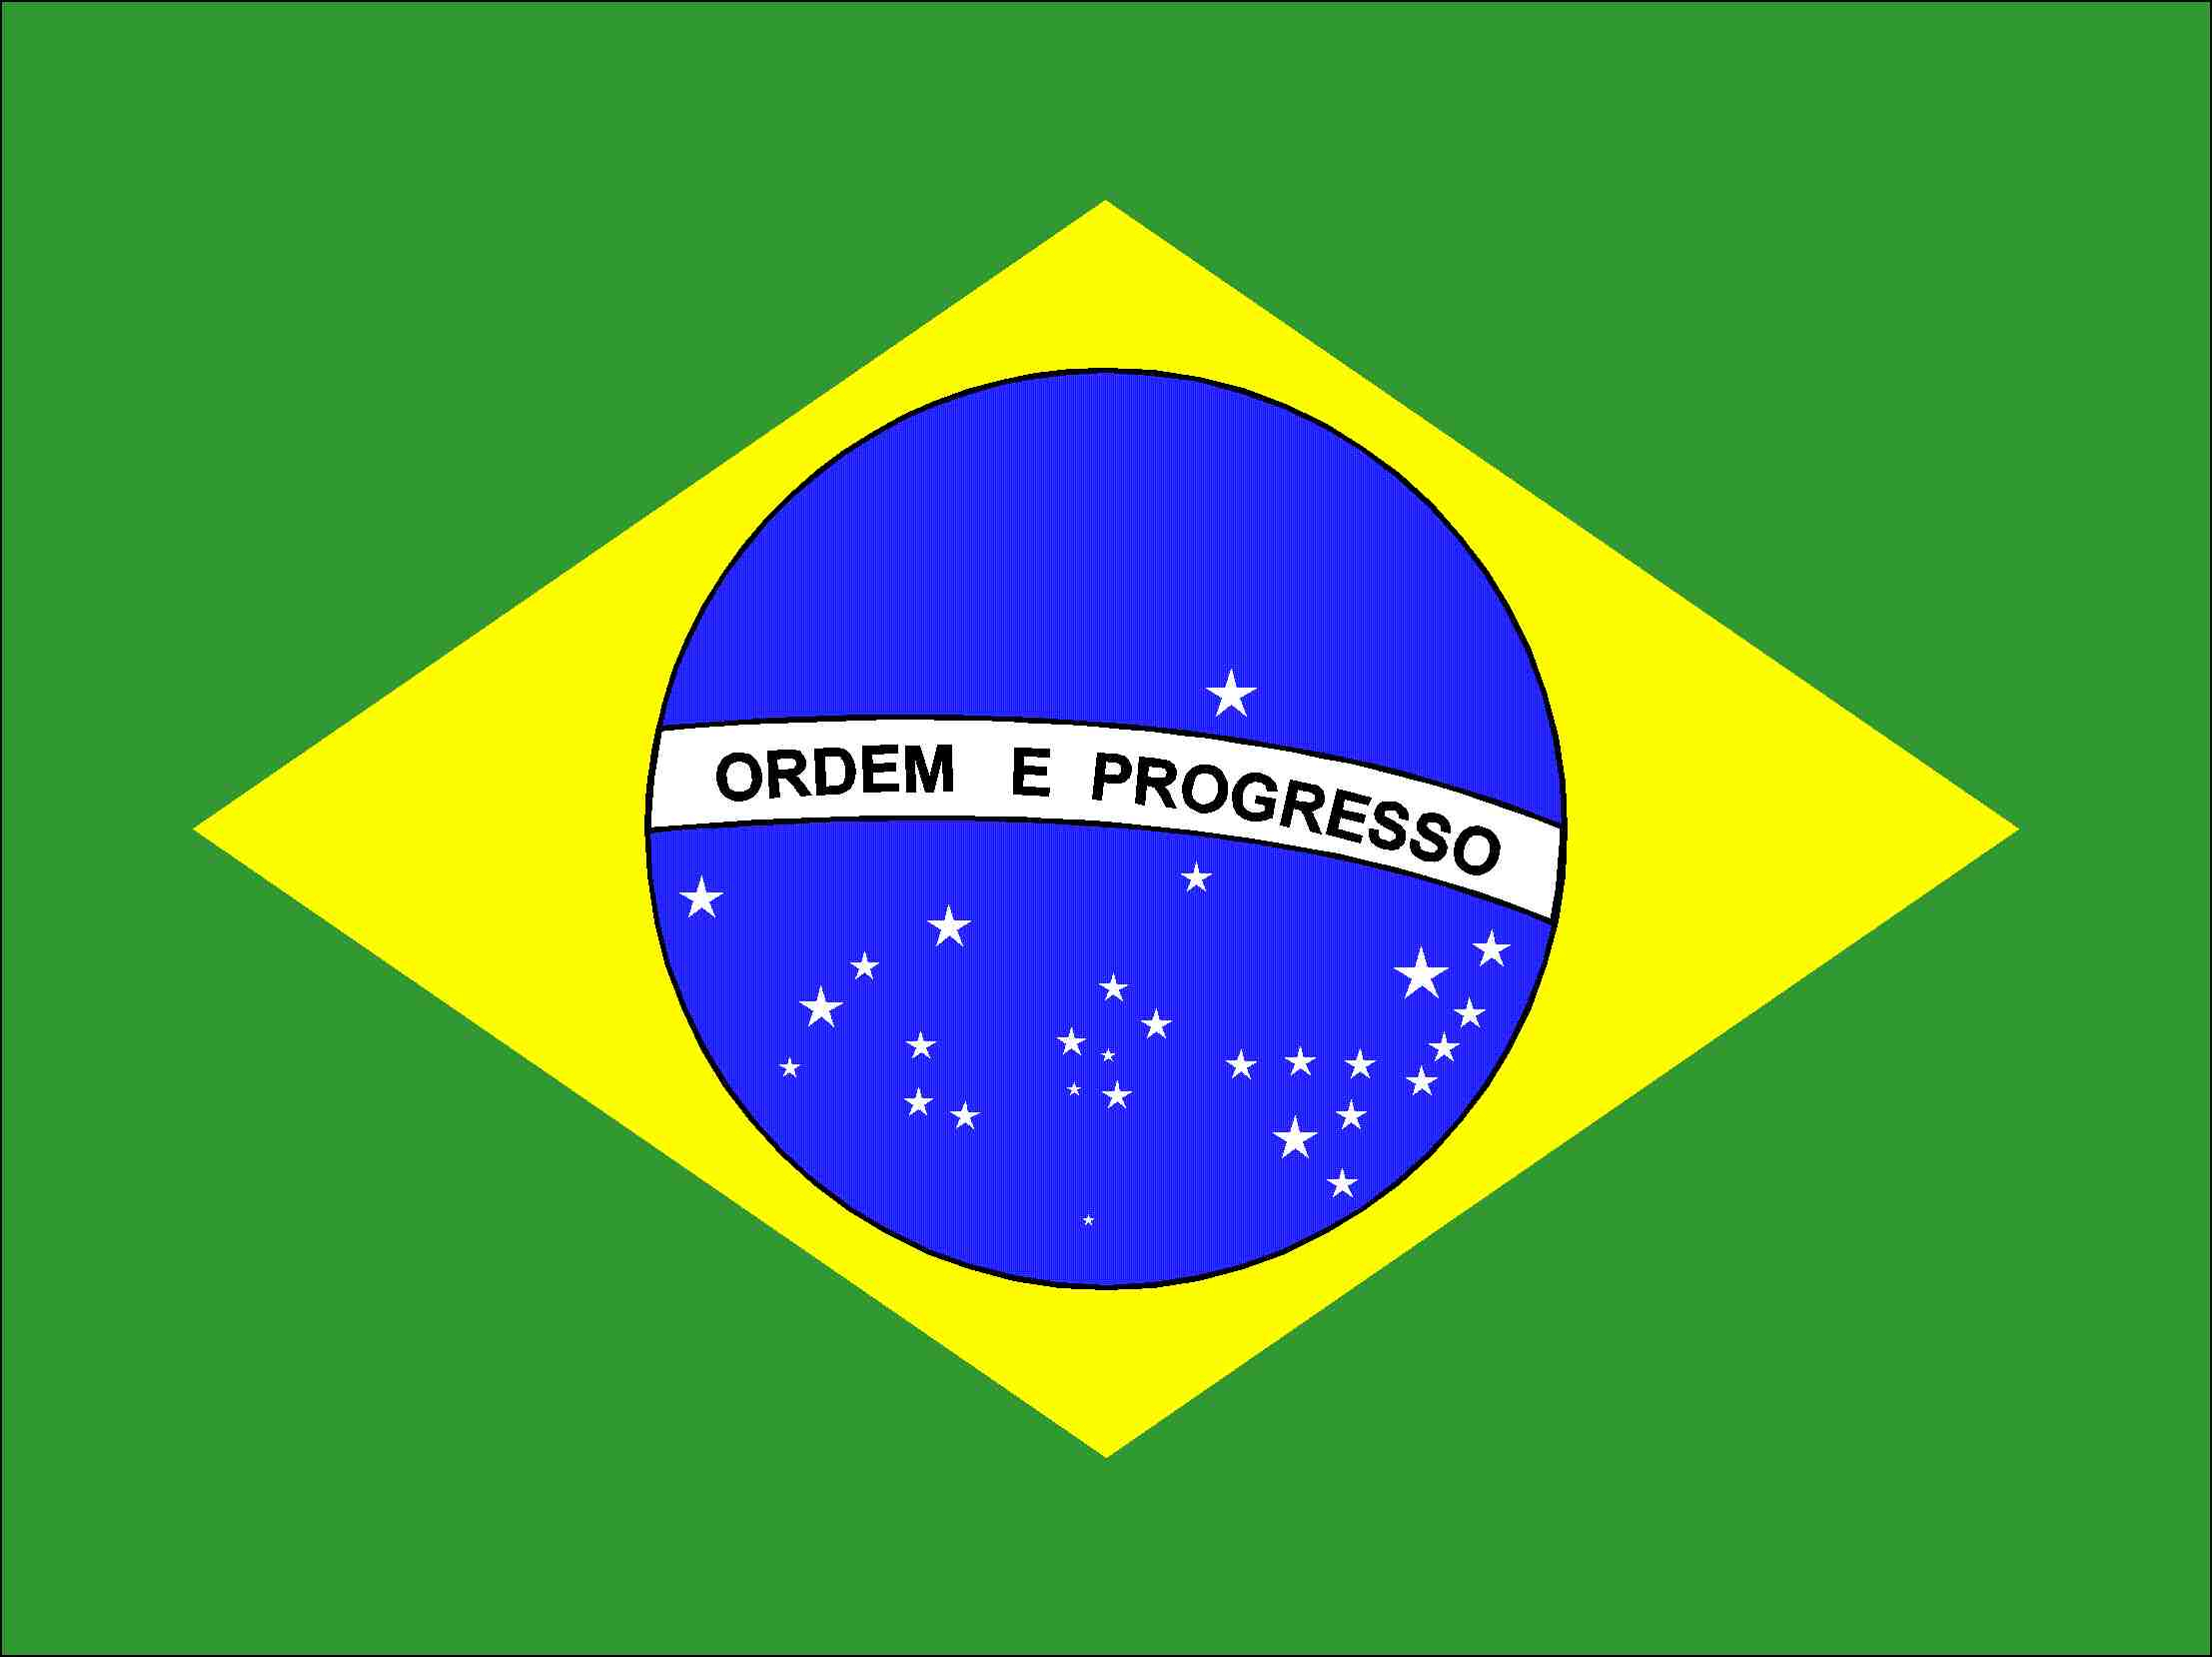 bandera-brasil.jpg